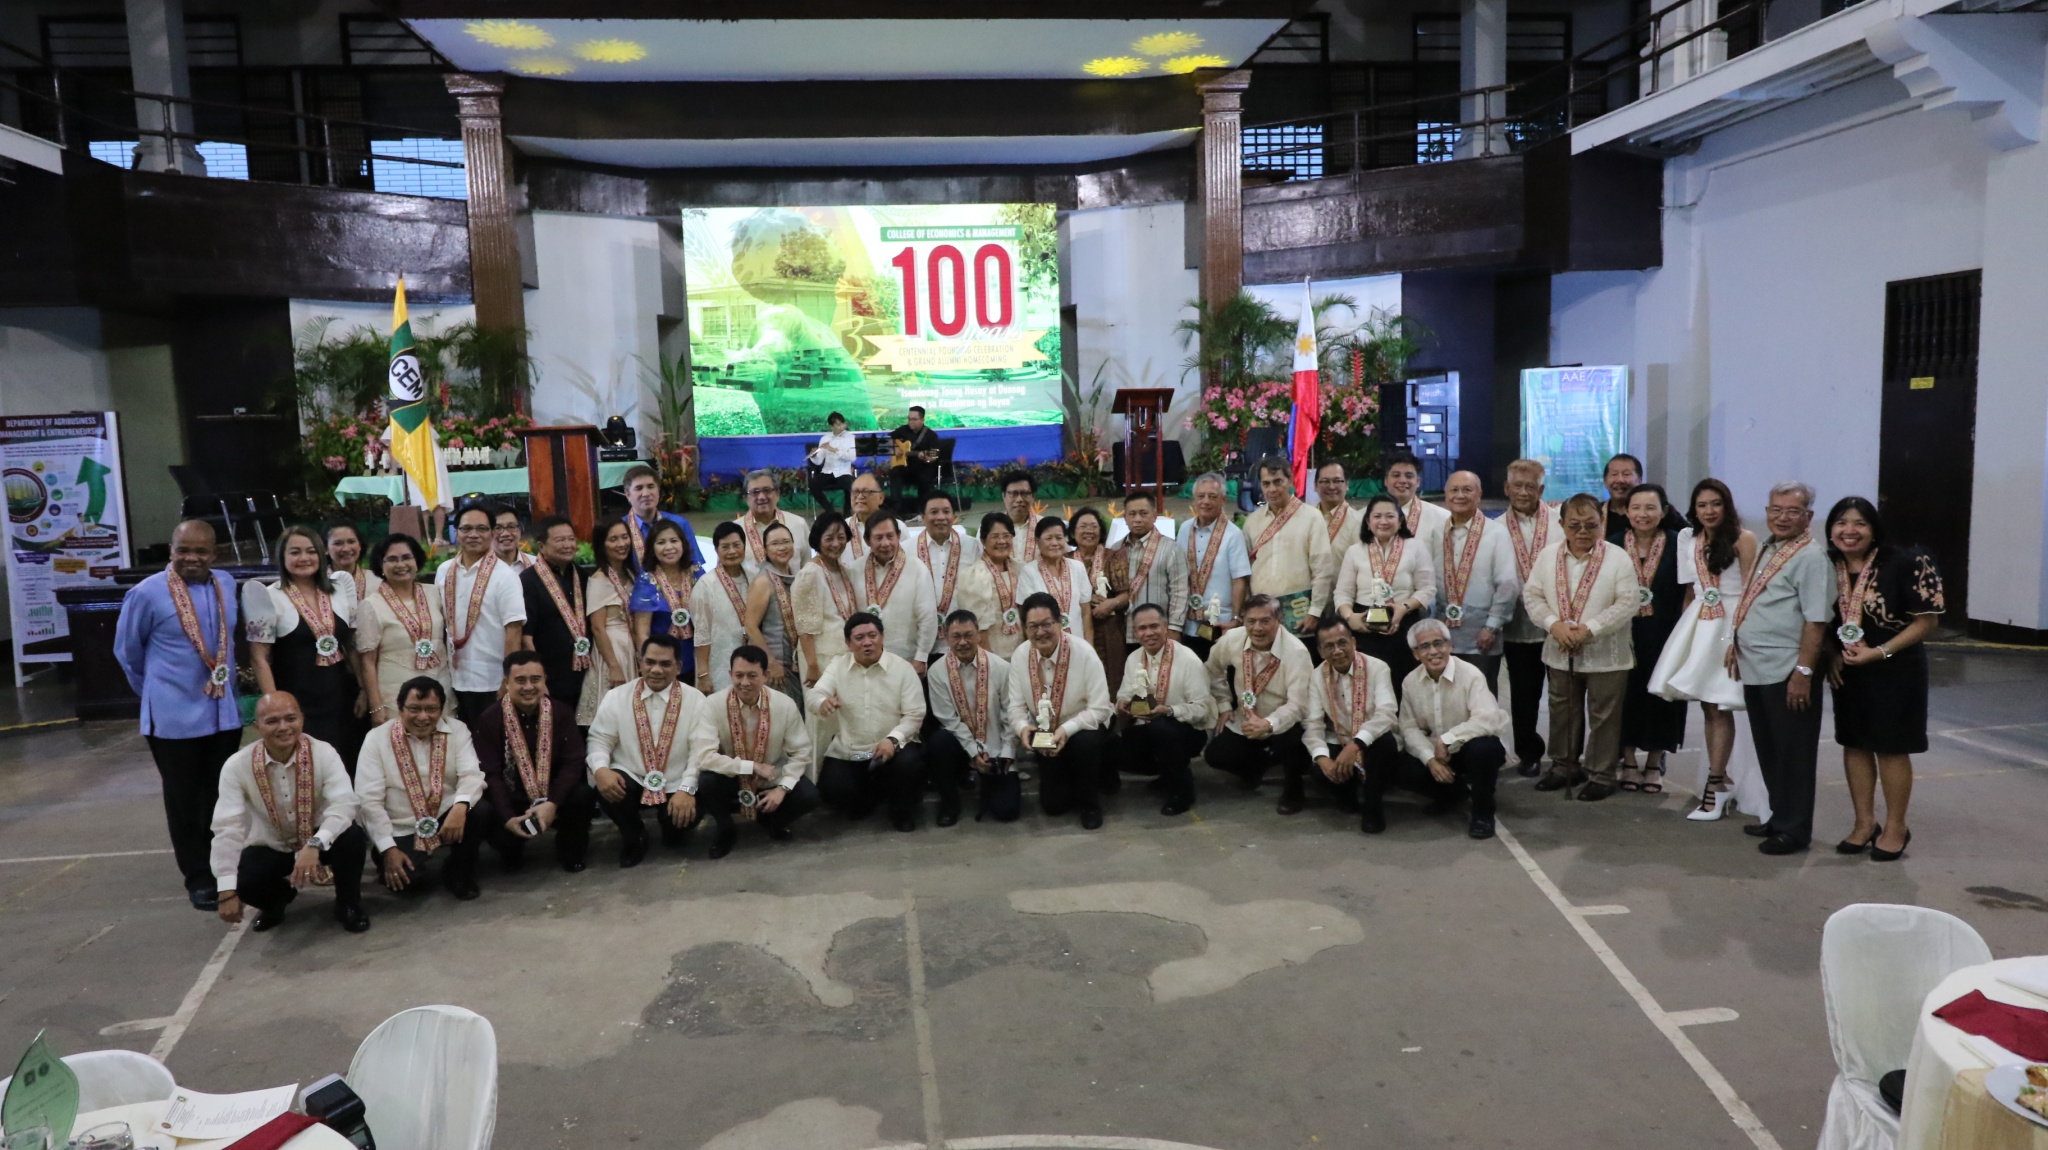 100 outstanding alumni named at CEM’s centenary